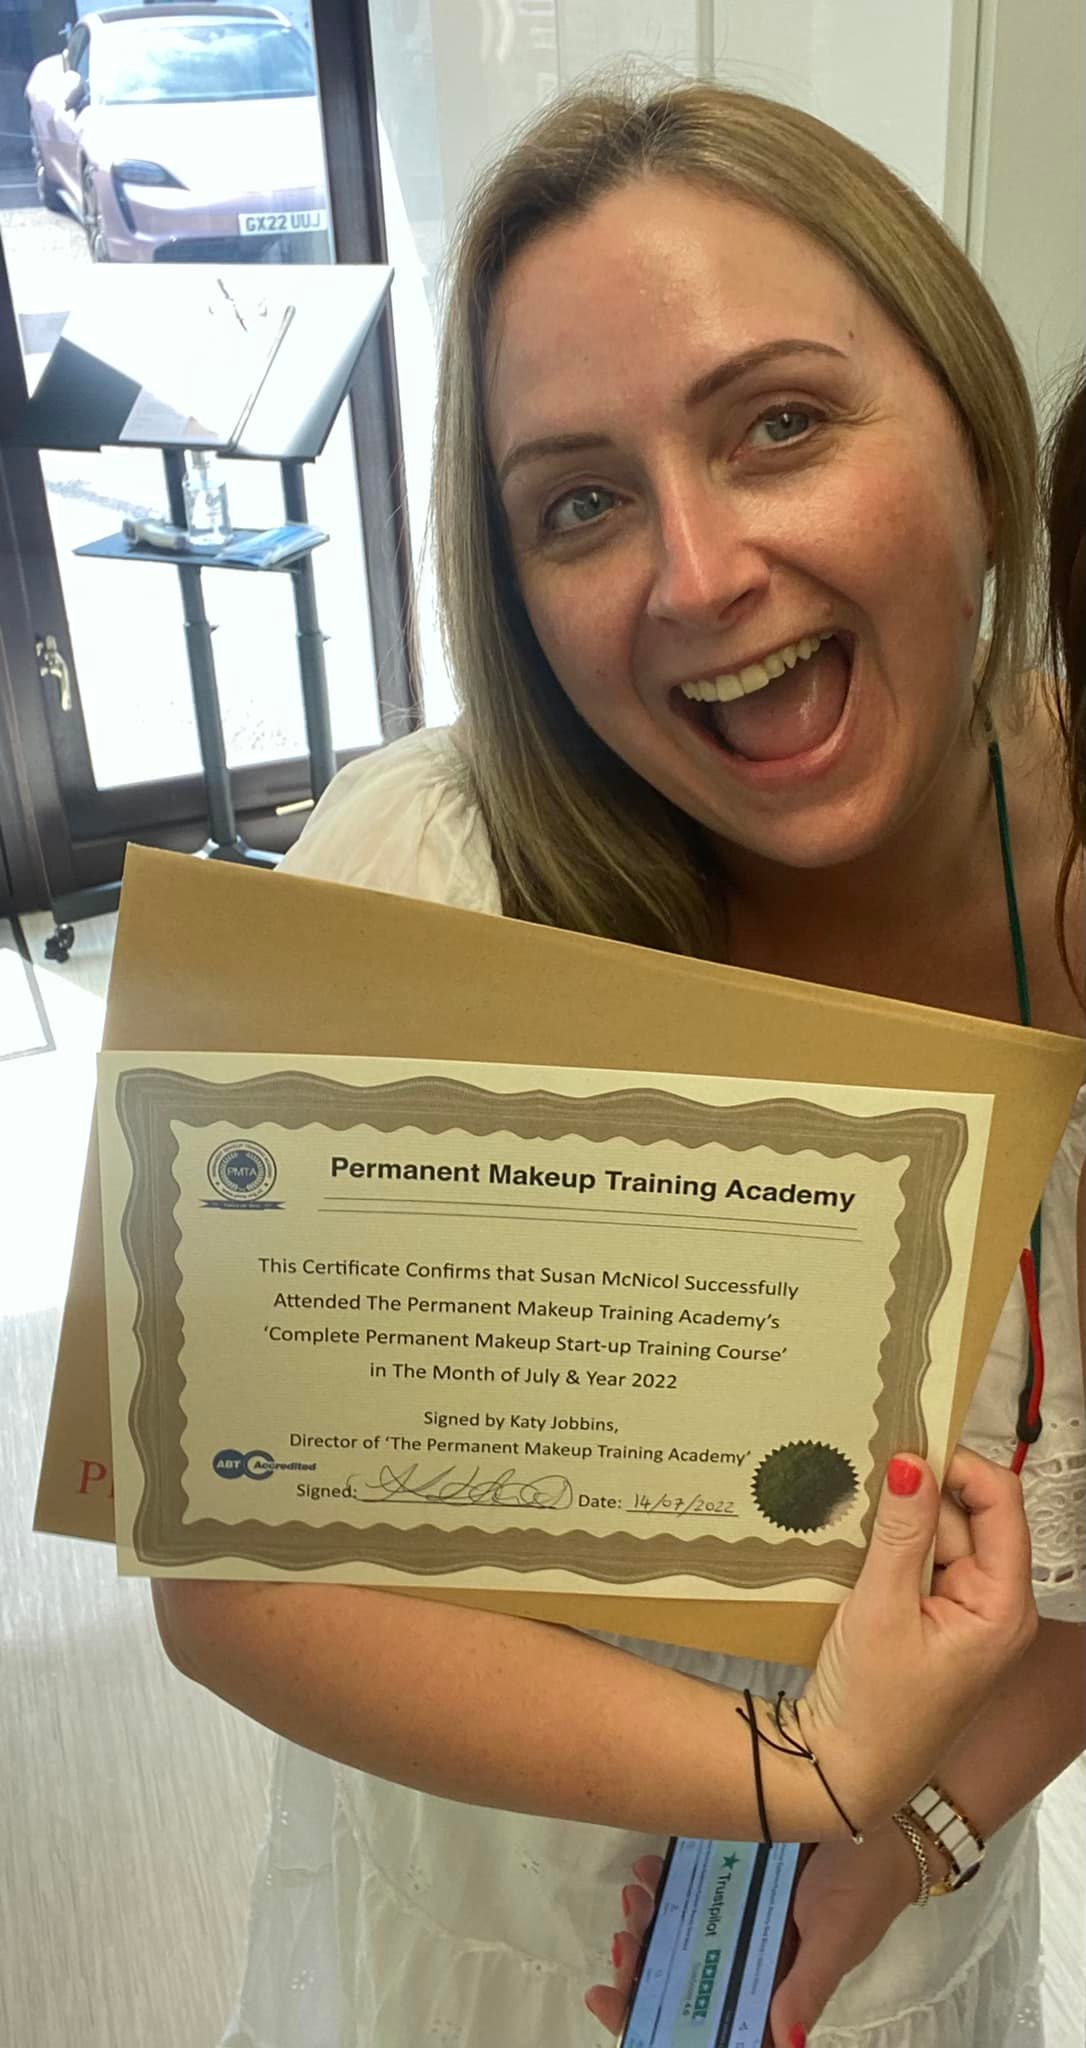 Susan receiving her permanent makeup training certificate